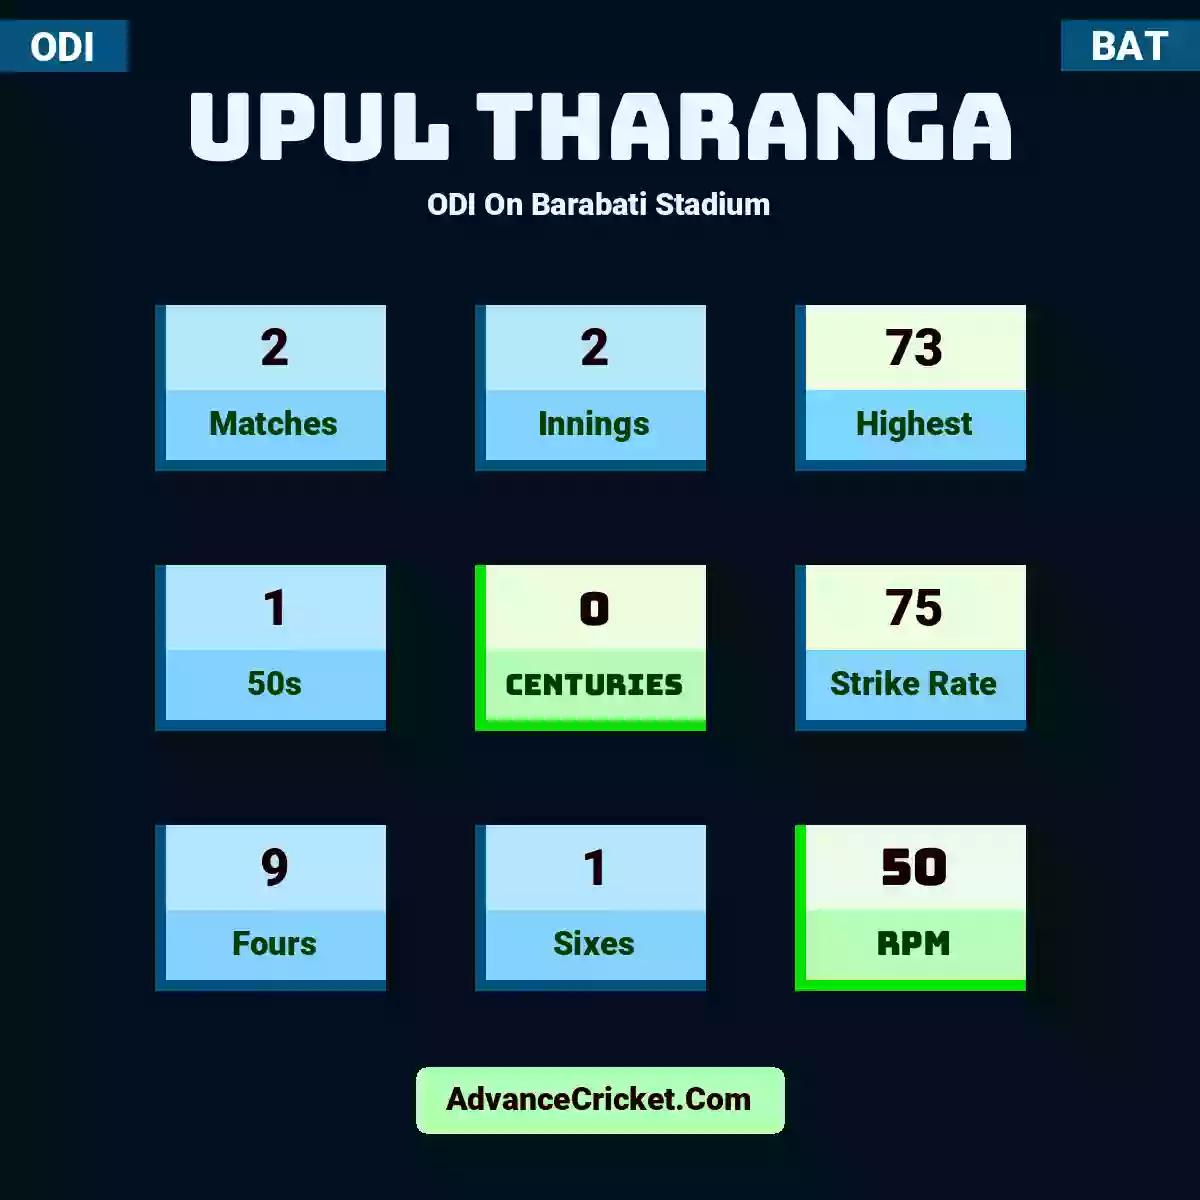 Upul Tharanga ODI  On Barabati Stadium, Upul Tharanga played 2 matches, scored 73 runs as highest, 1 half-centuries, and 0 centuries, with a strike rate of 75. U.Tharanga hit 9 fours and 1 sixes, with an RPM of 50.